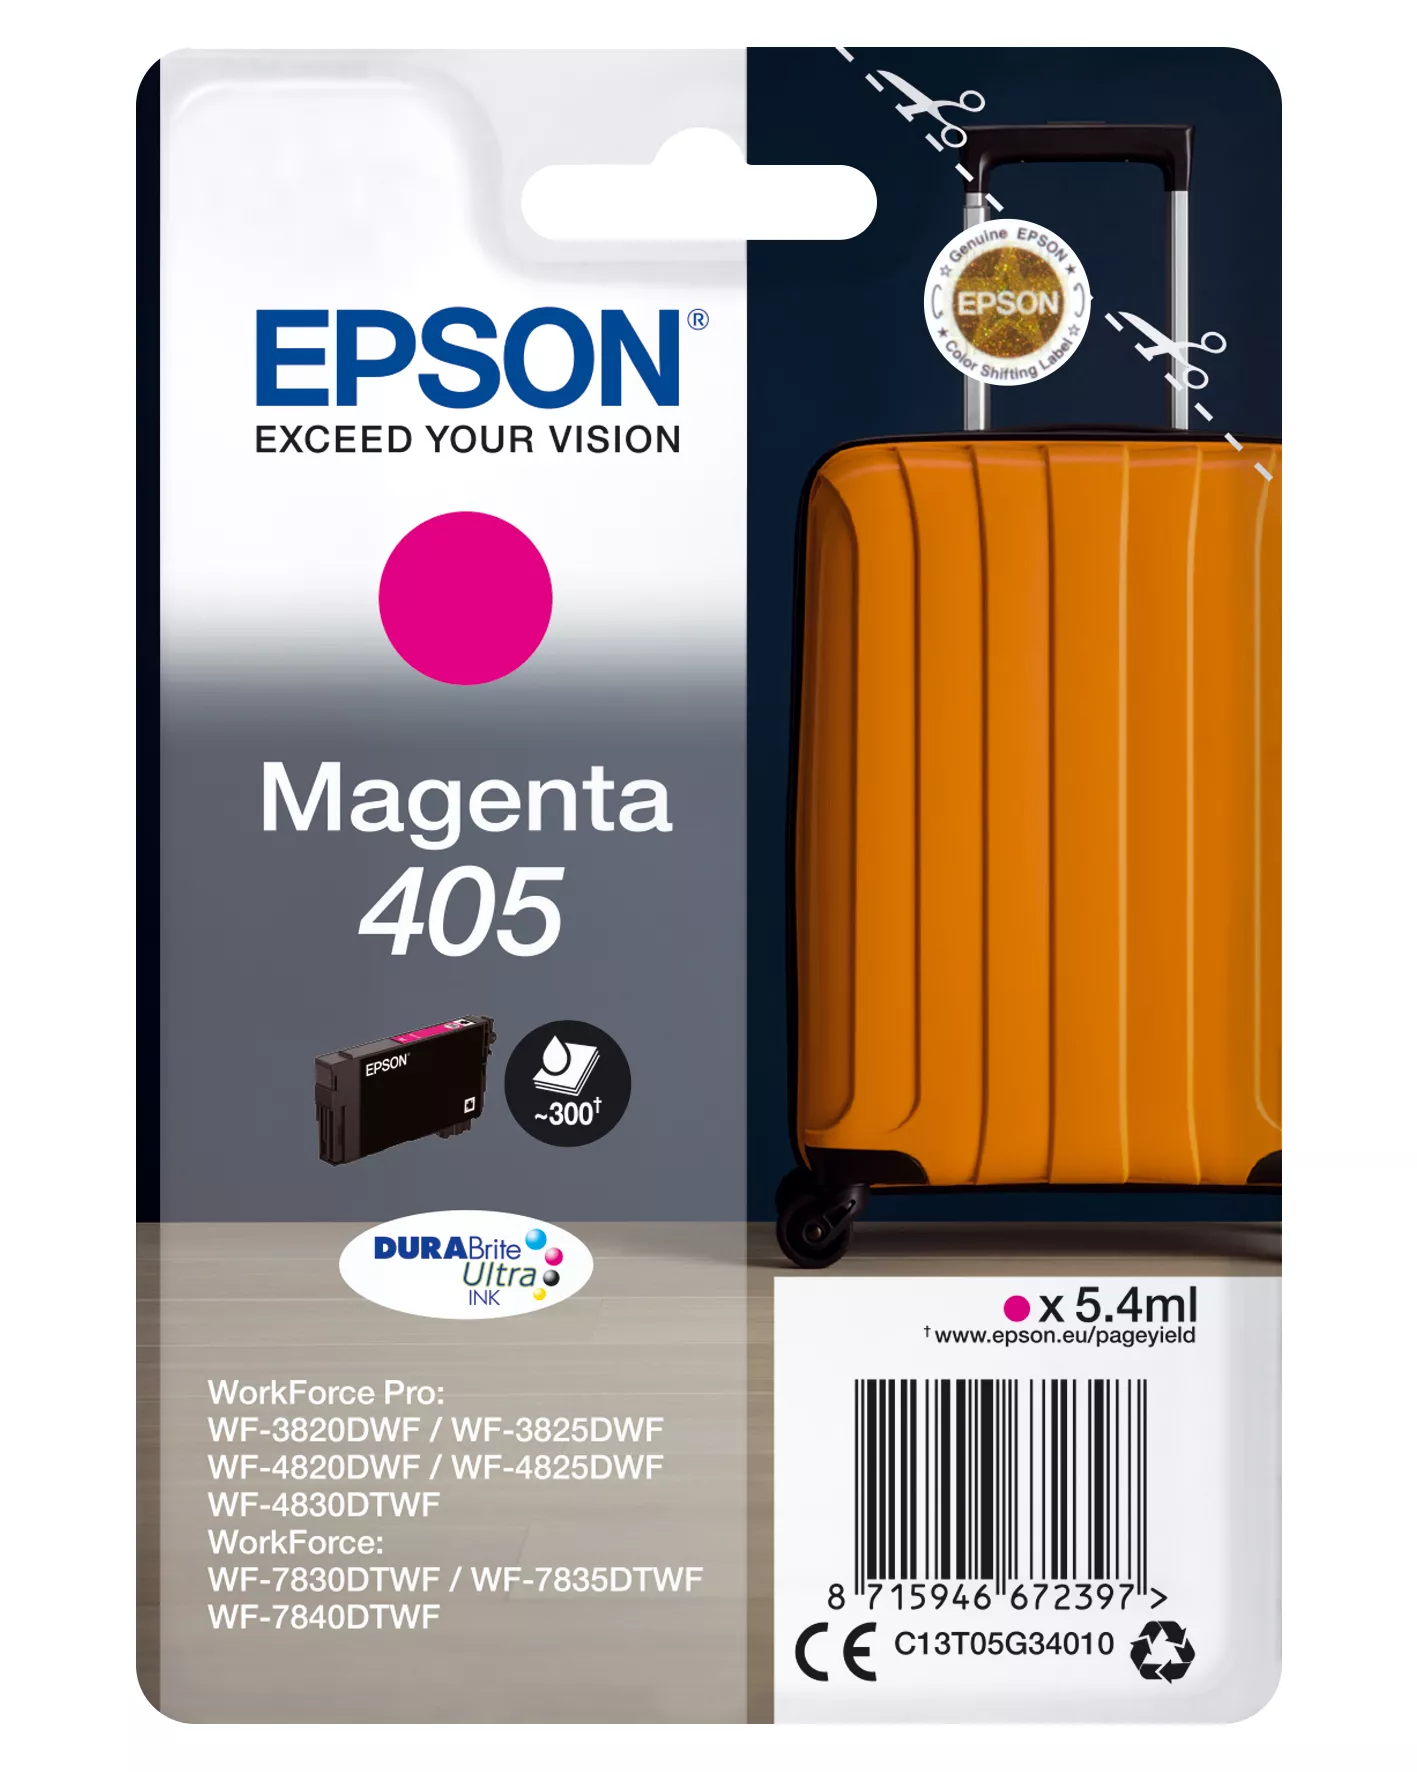 Achat EPSON Singlepack Magenta 405 DURABrite Ultra Ink et autres produits de la marque Epson